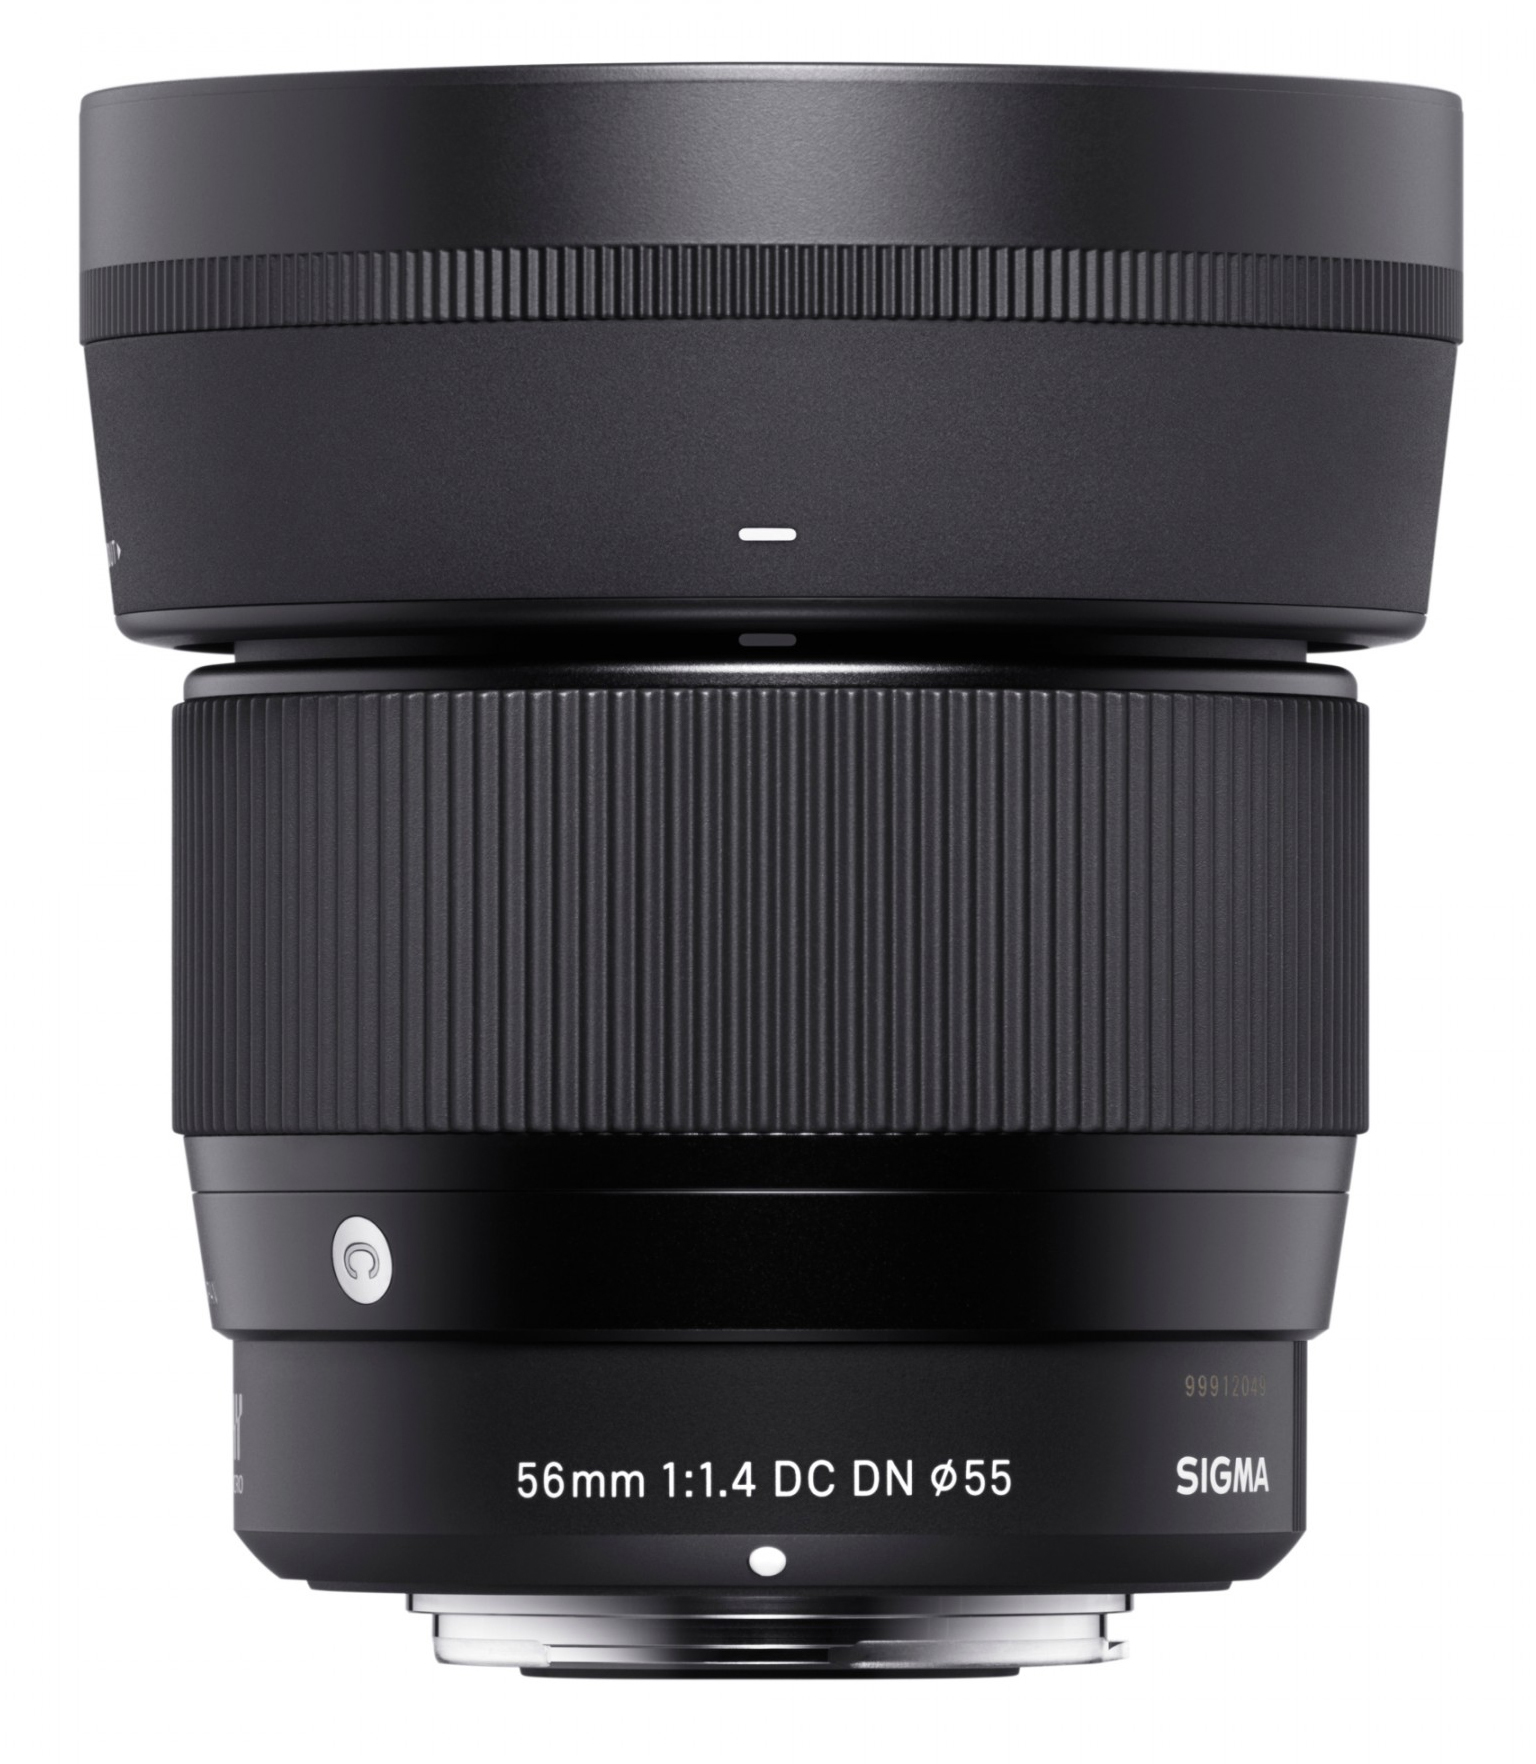 Sigma 30mm f1.4 DC DN. Sigma 30mm Art Canon. Sigma 56mm f/1.4. Sigma 56mm f/1.4 DC DN. Sigma af 30mm